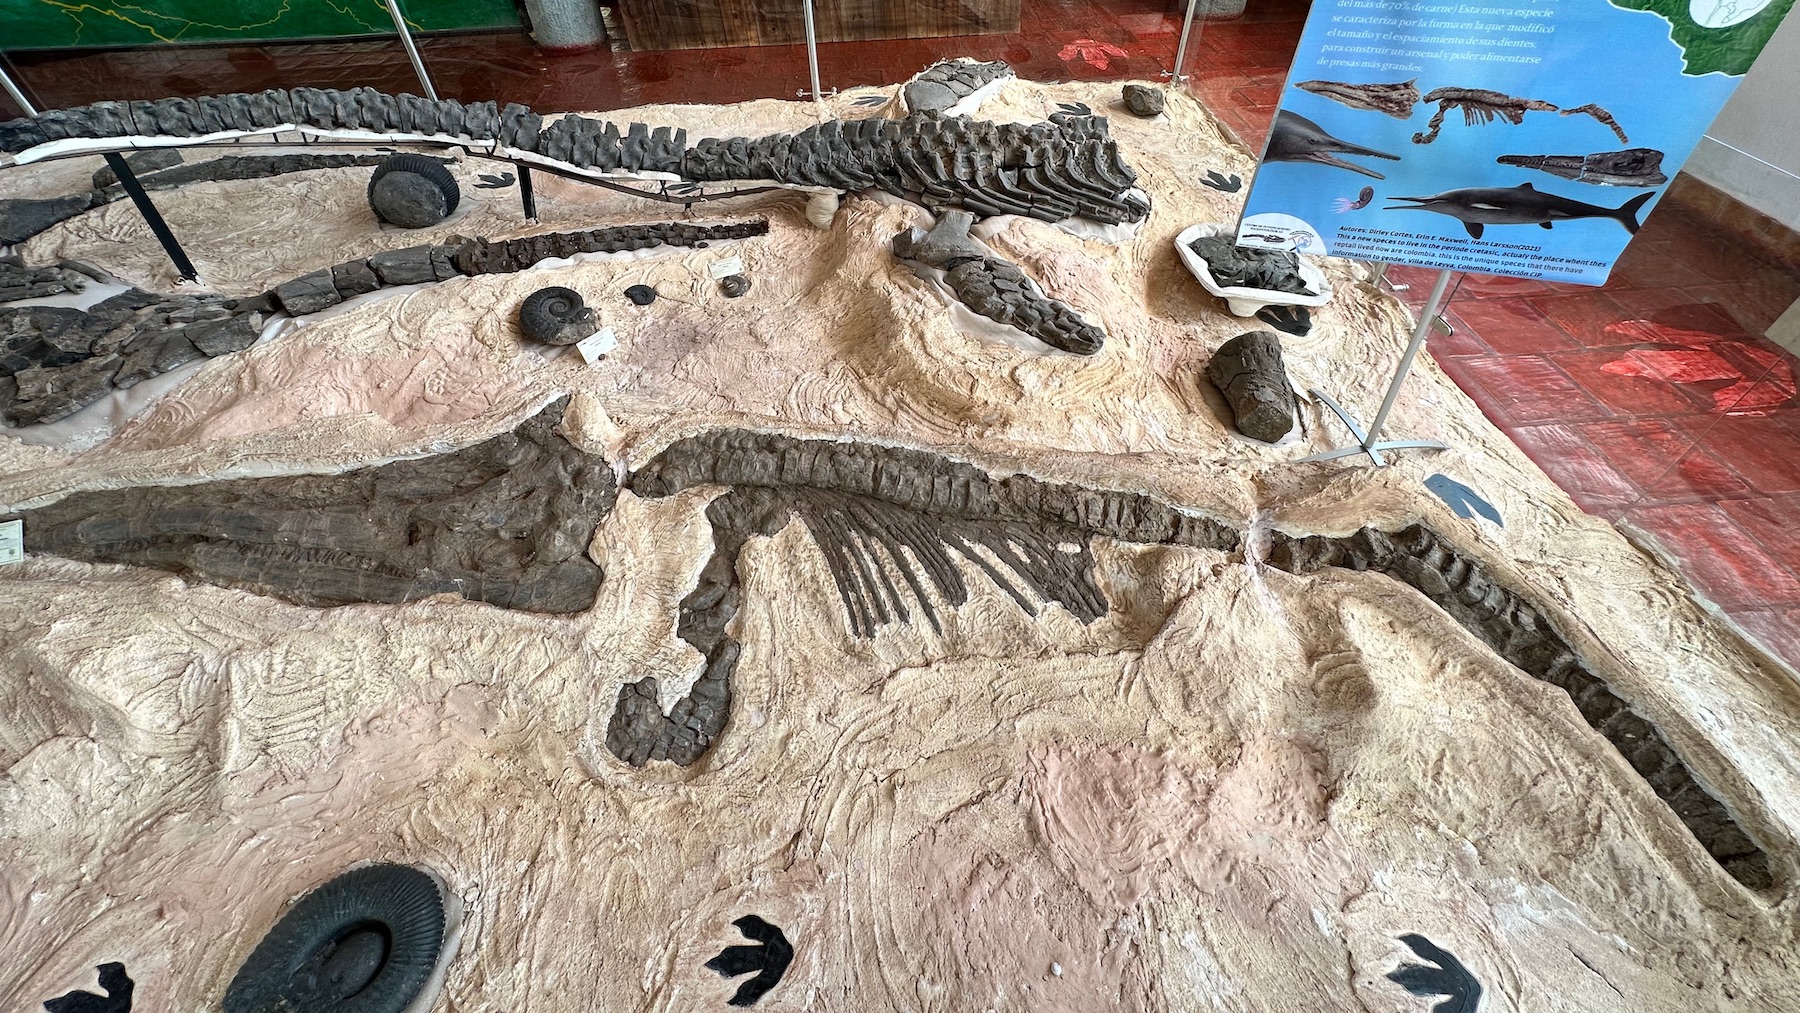 Fossils of ichthyosaurus encased in plaster